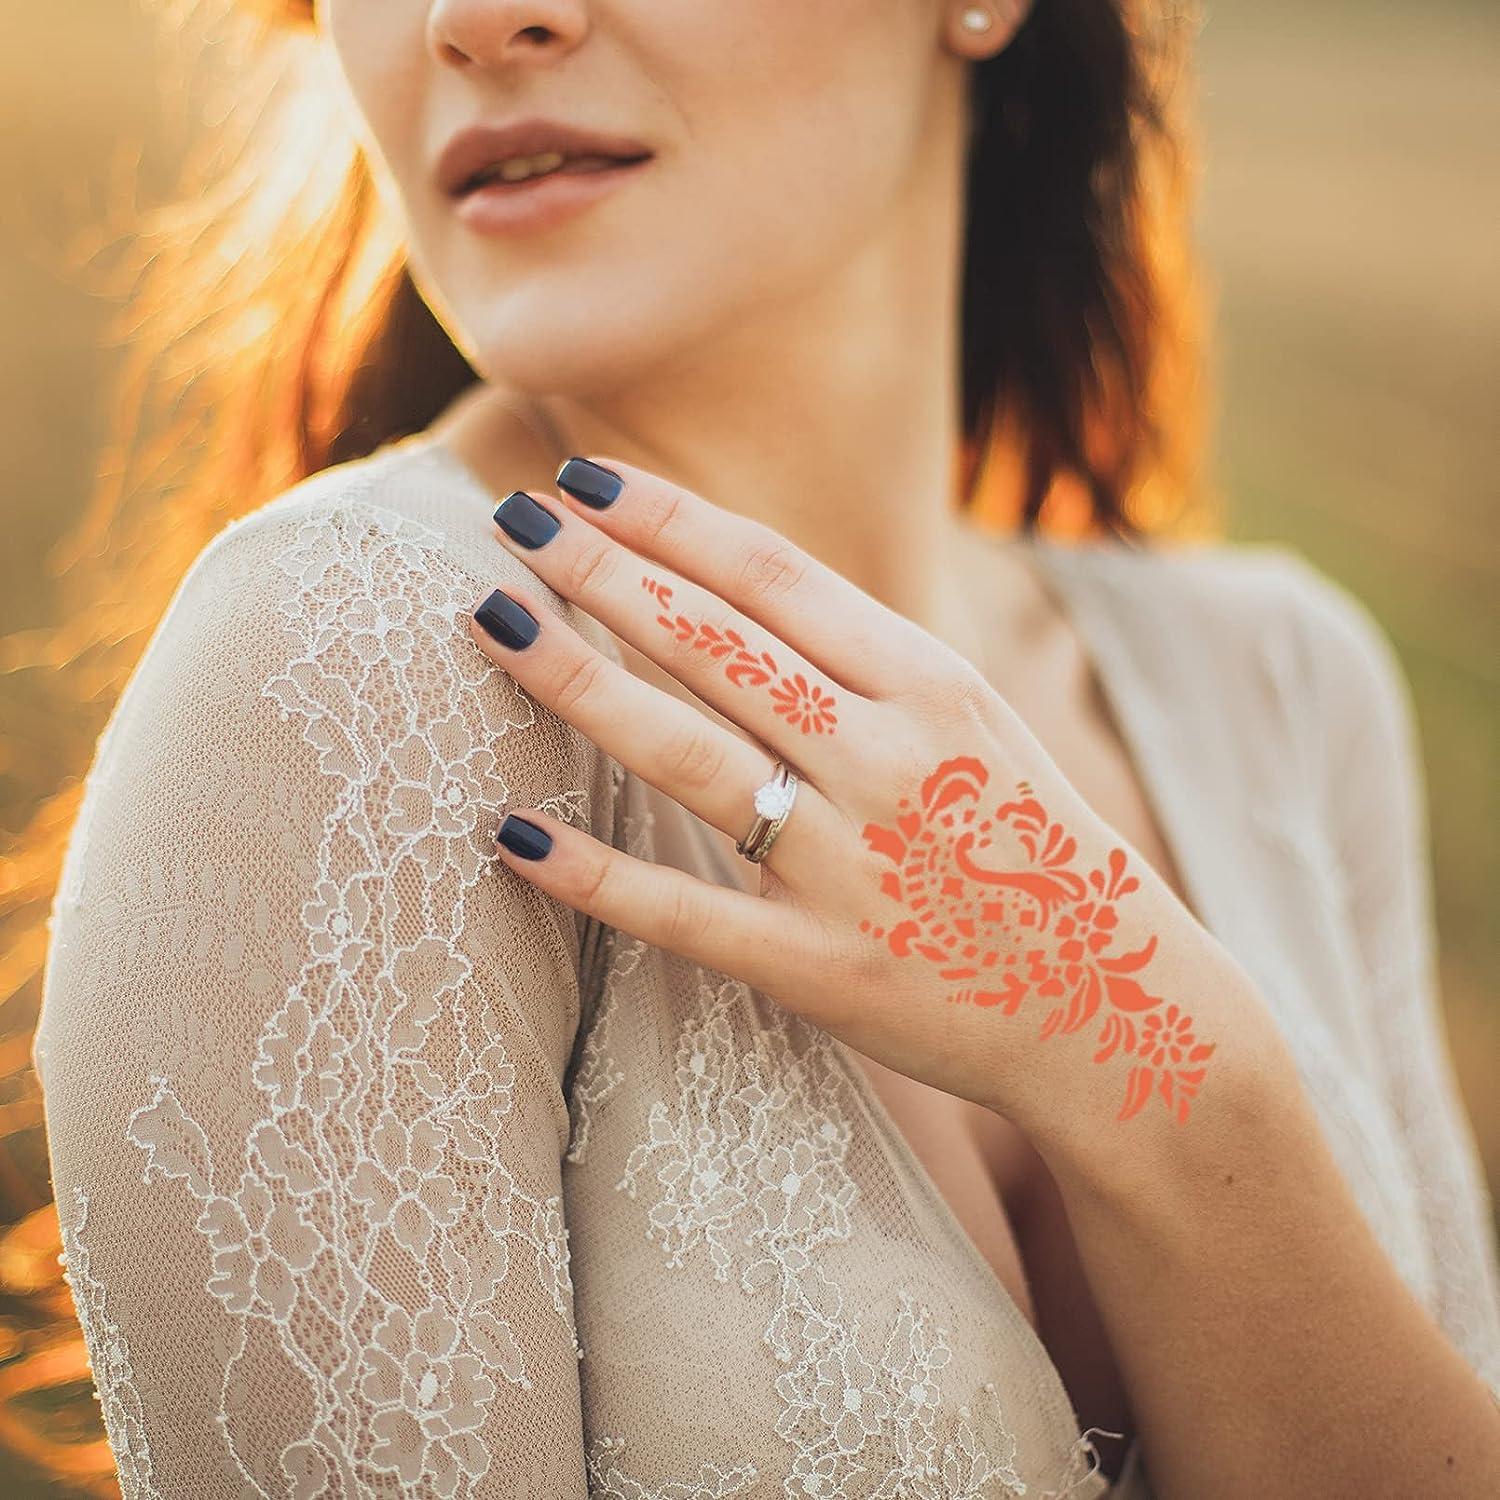  CUTELIILI Henna Tattoo Stencils Reusable for Women